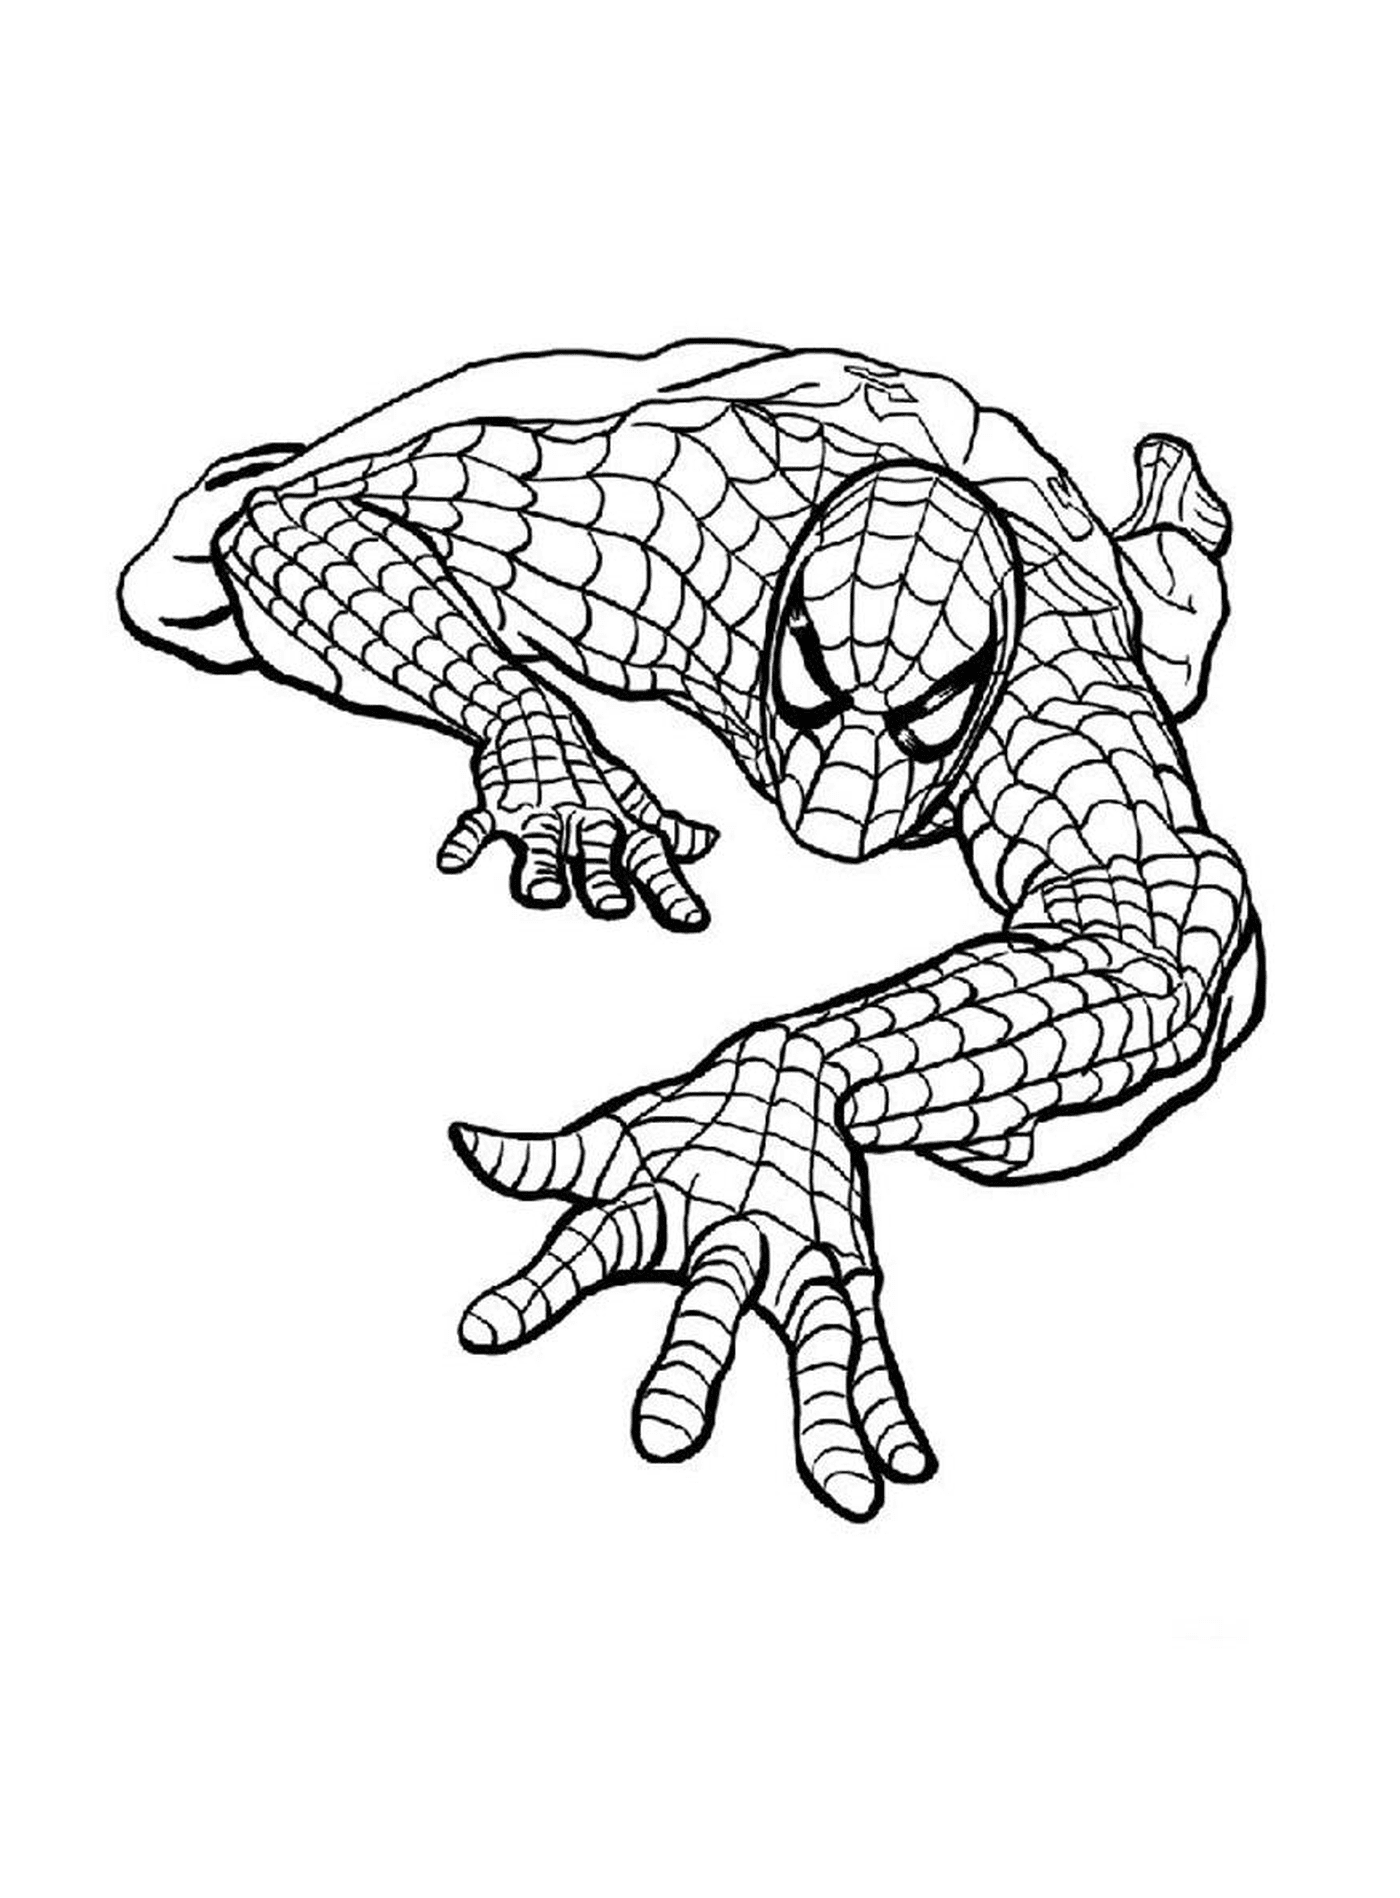  Spiderman represented in drawing 